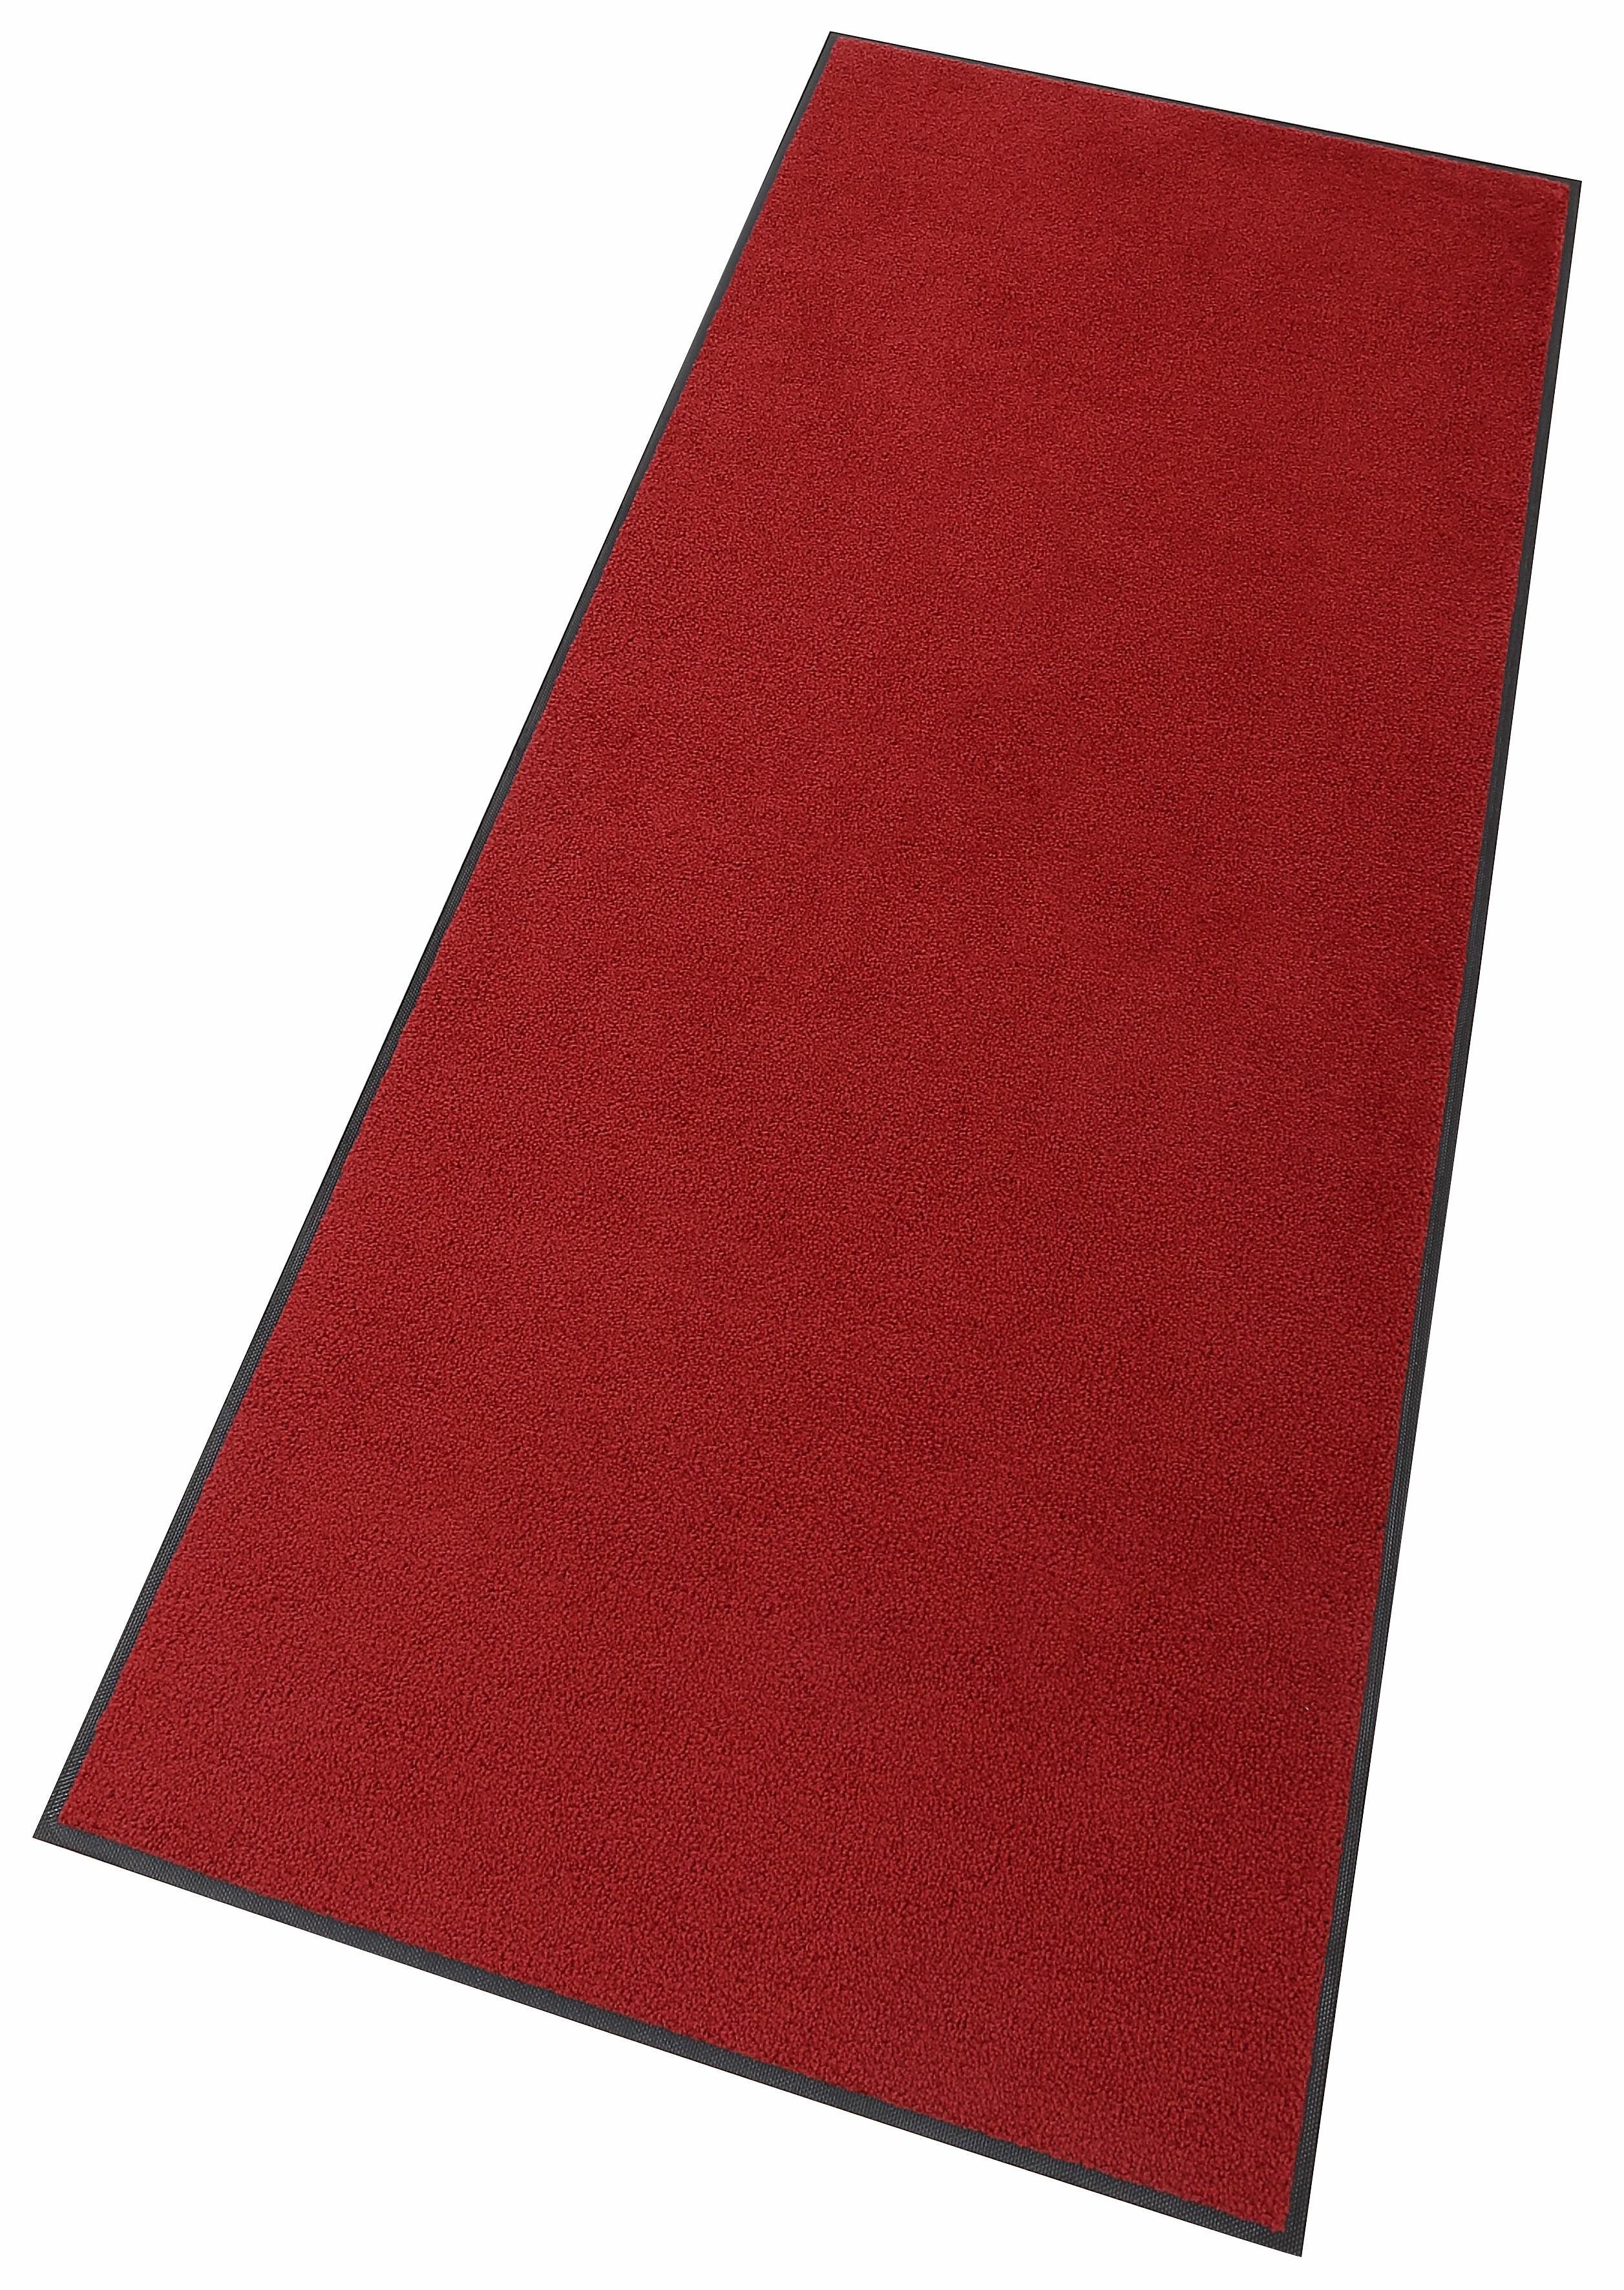 Läufer Original Uni, wash+dry by Kleen-Tex, rechteckig, Höhe: 9 mm, Schmutzfangläufer, Schmutzfangteppich, Schmutzmatte, rutschhemmend rot